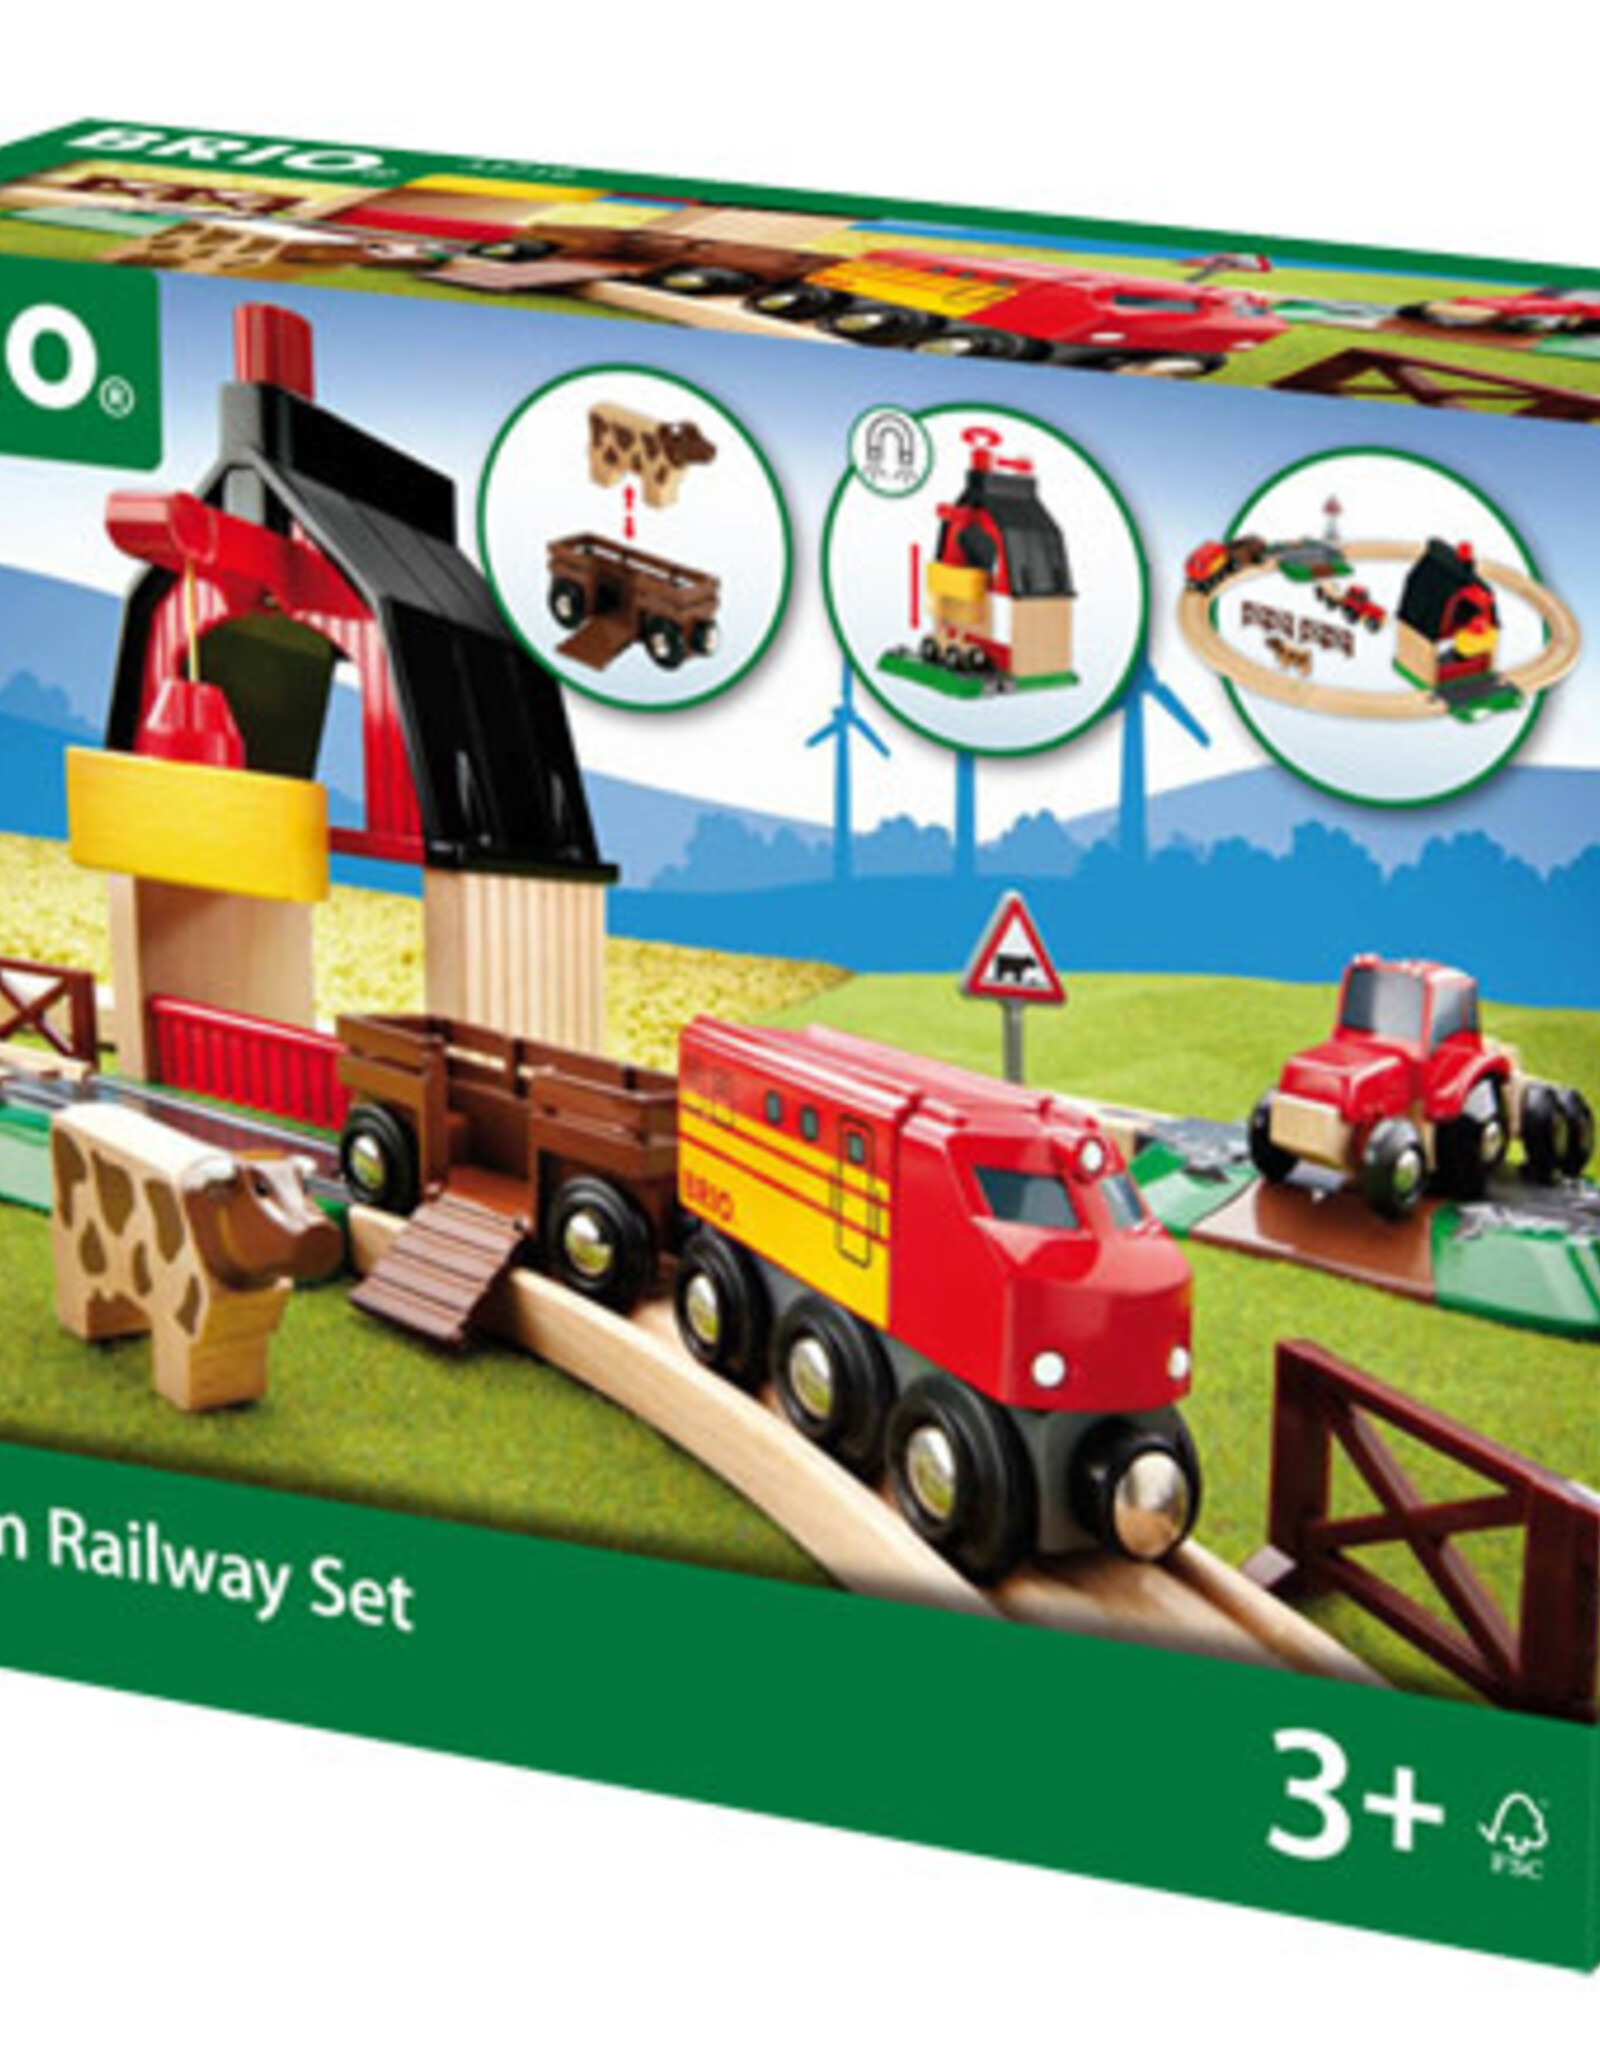 BRIO CORP Farm Railway Set